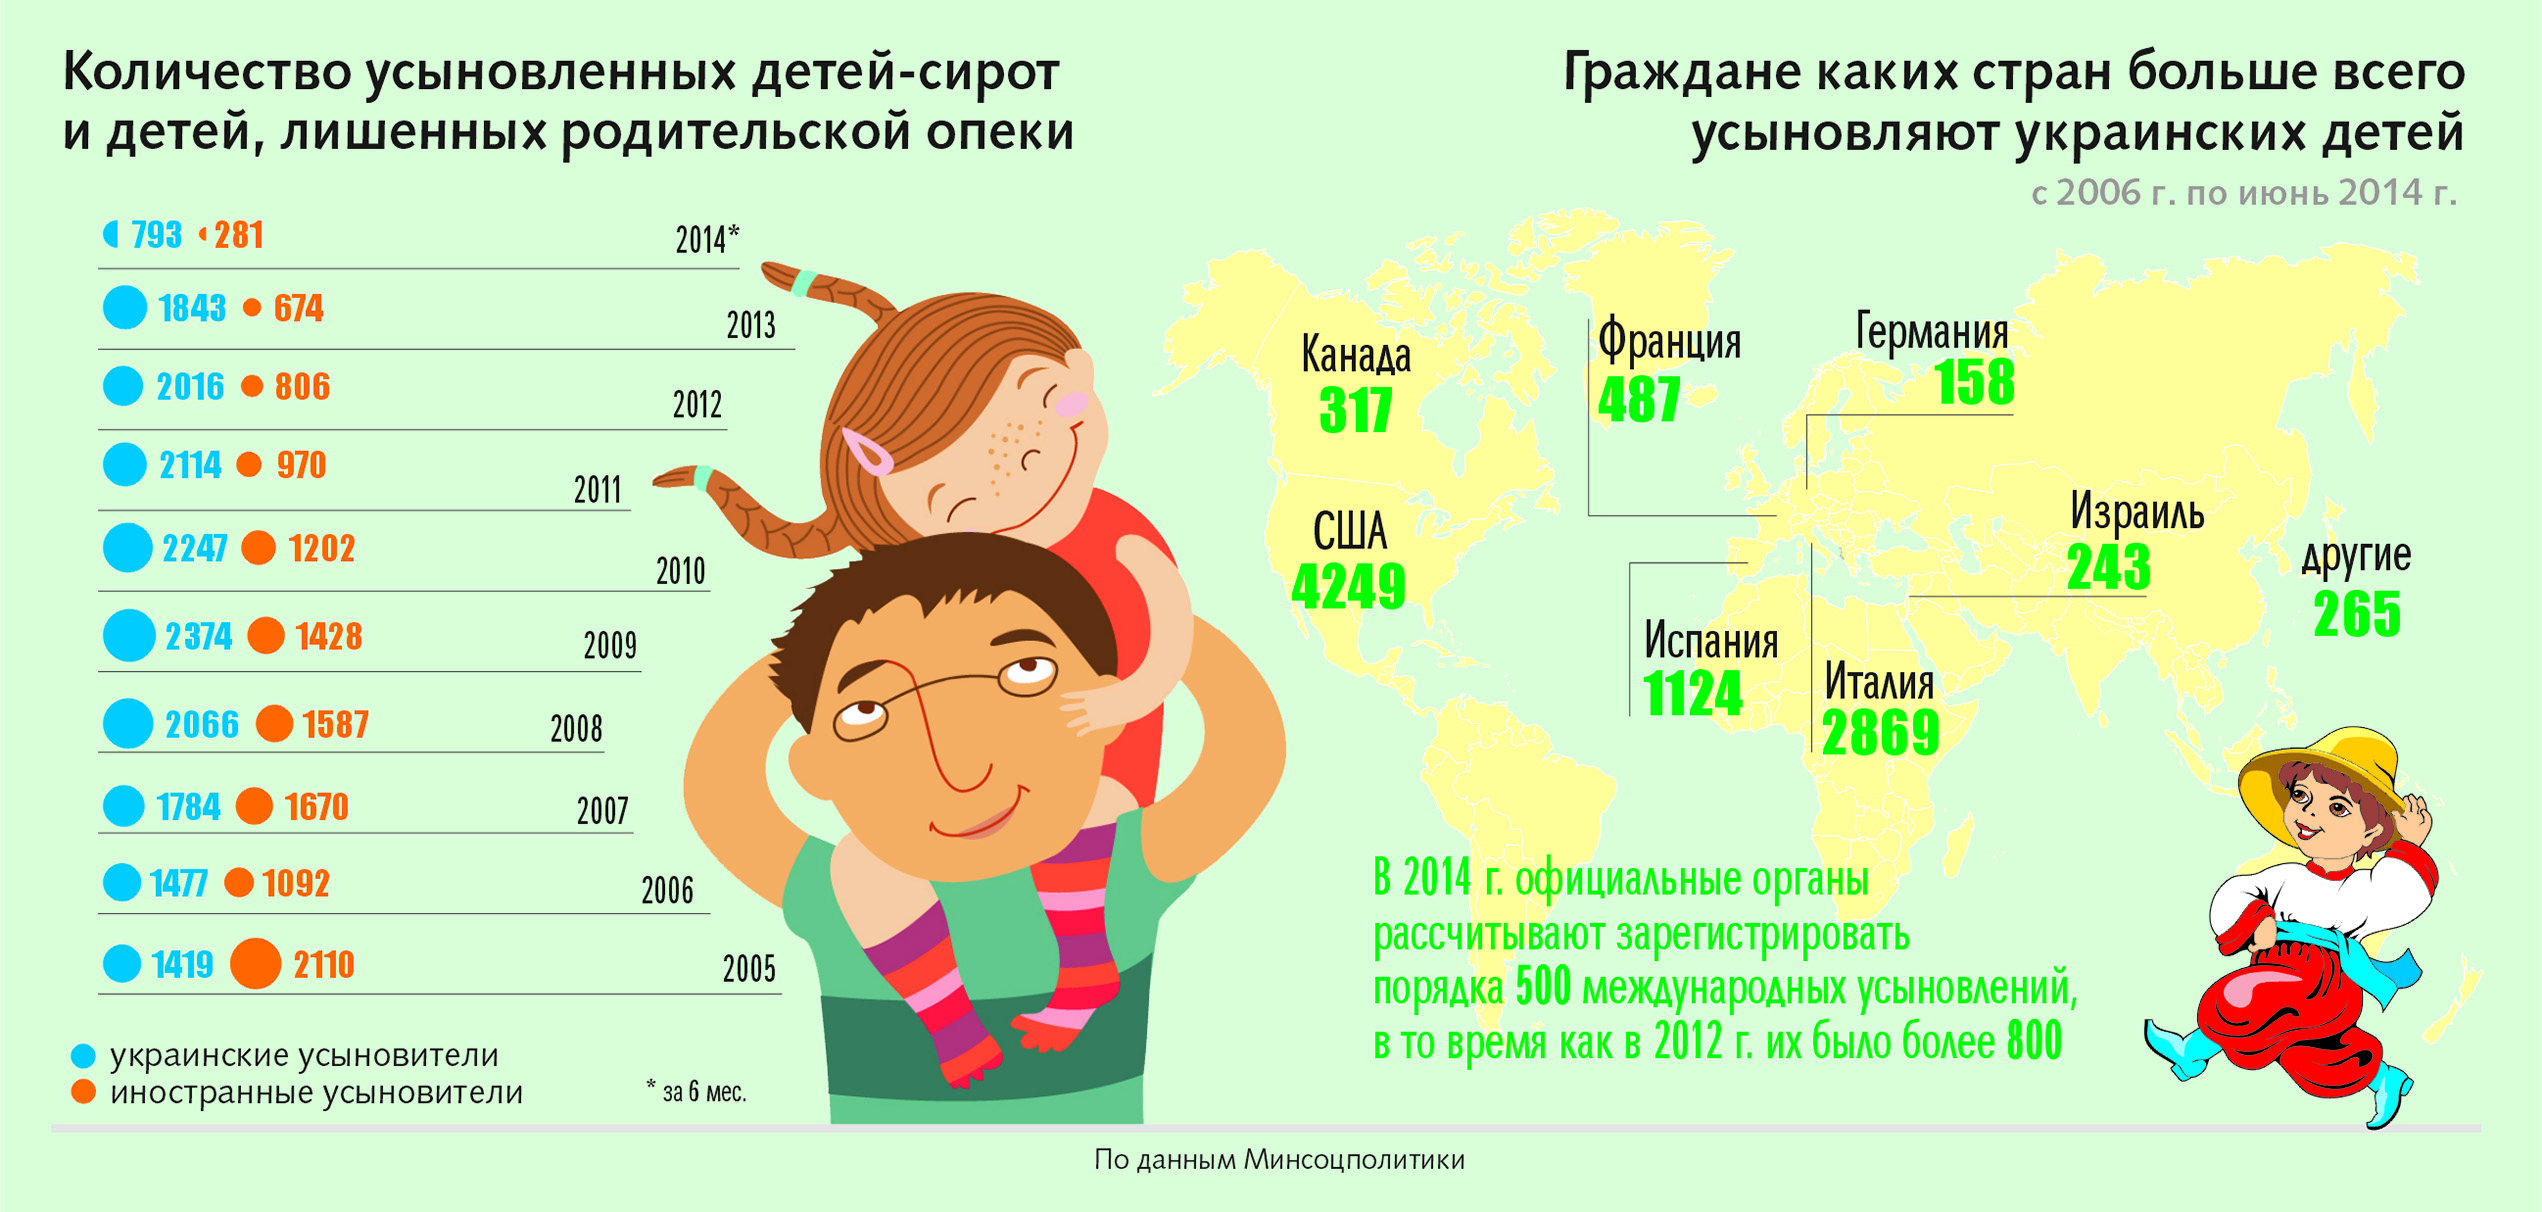 Статистика количества детей в россии. Статистика детей сирот по странам. Статистика детей сирот в России. Количество детей в стране. Количество сирот в мире по странам.